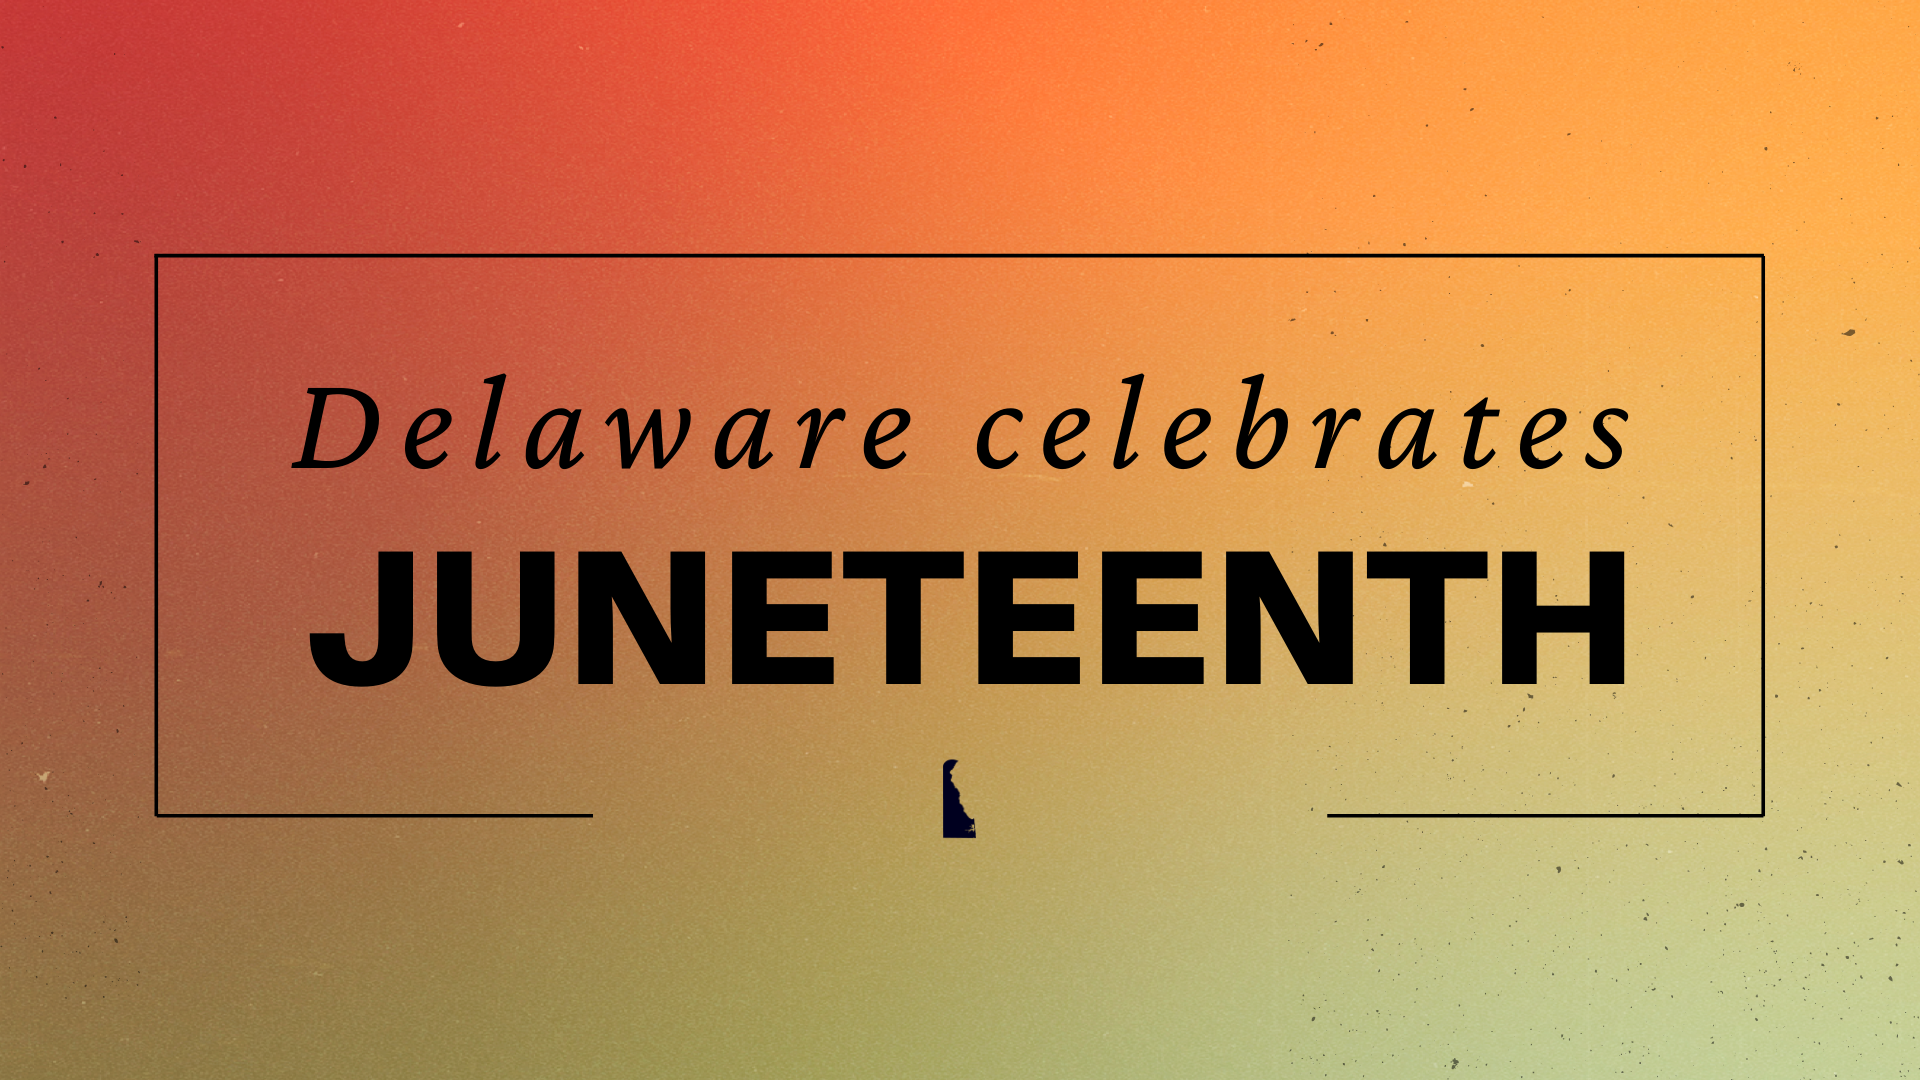 Delaware celebrates Juneteenth